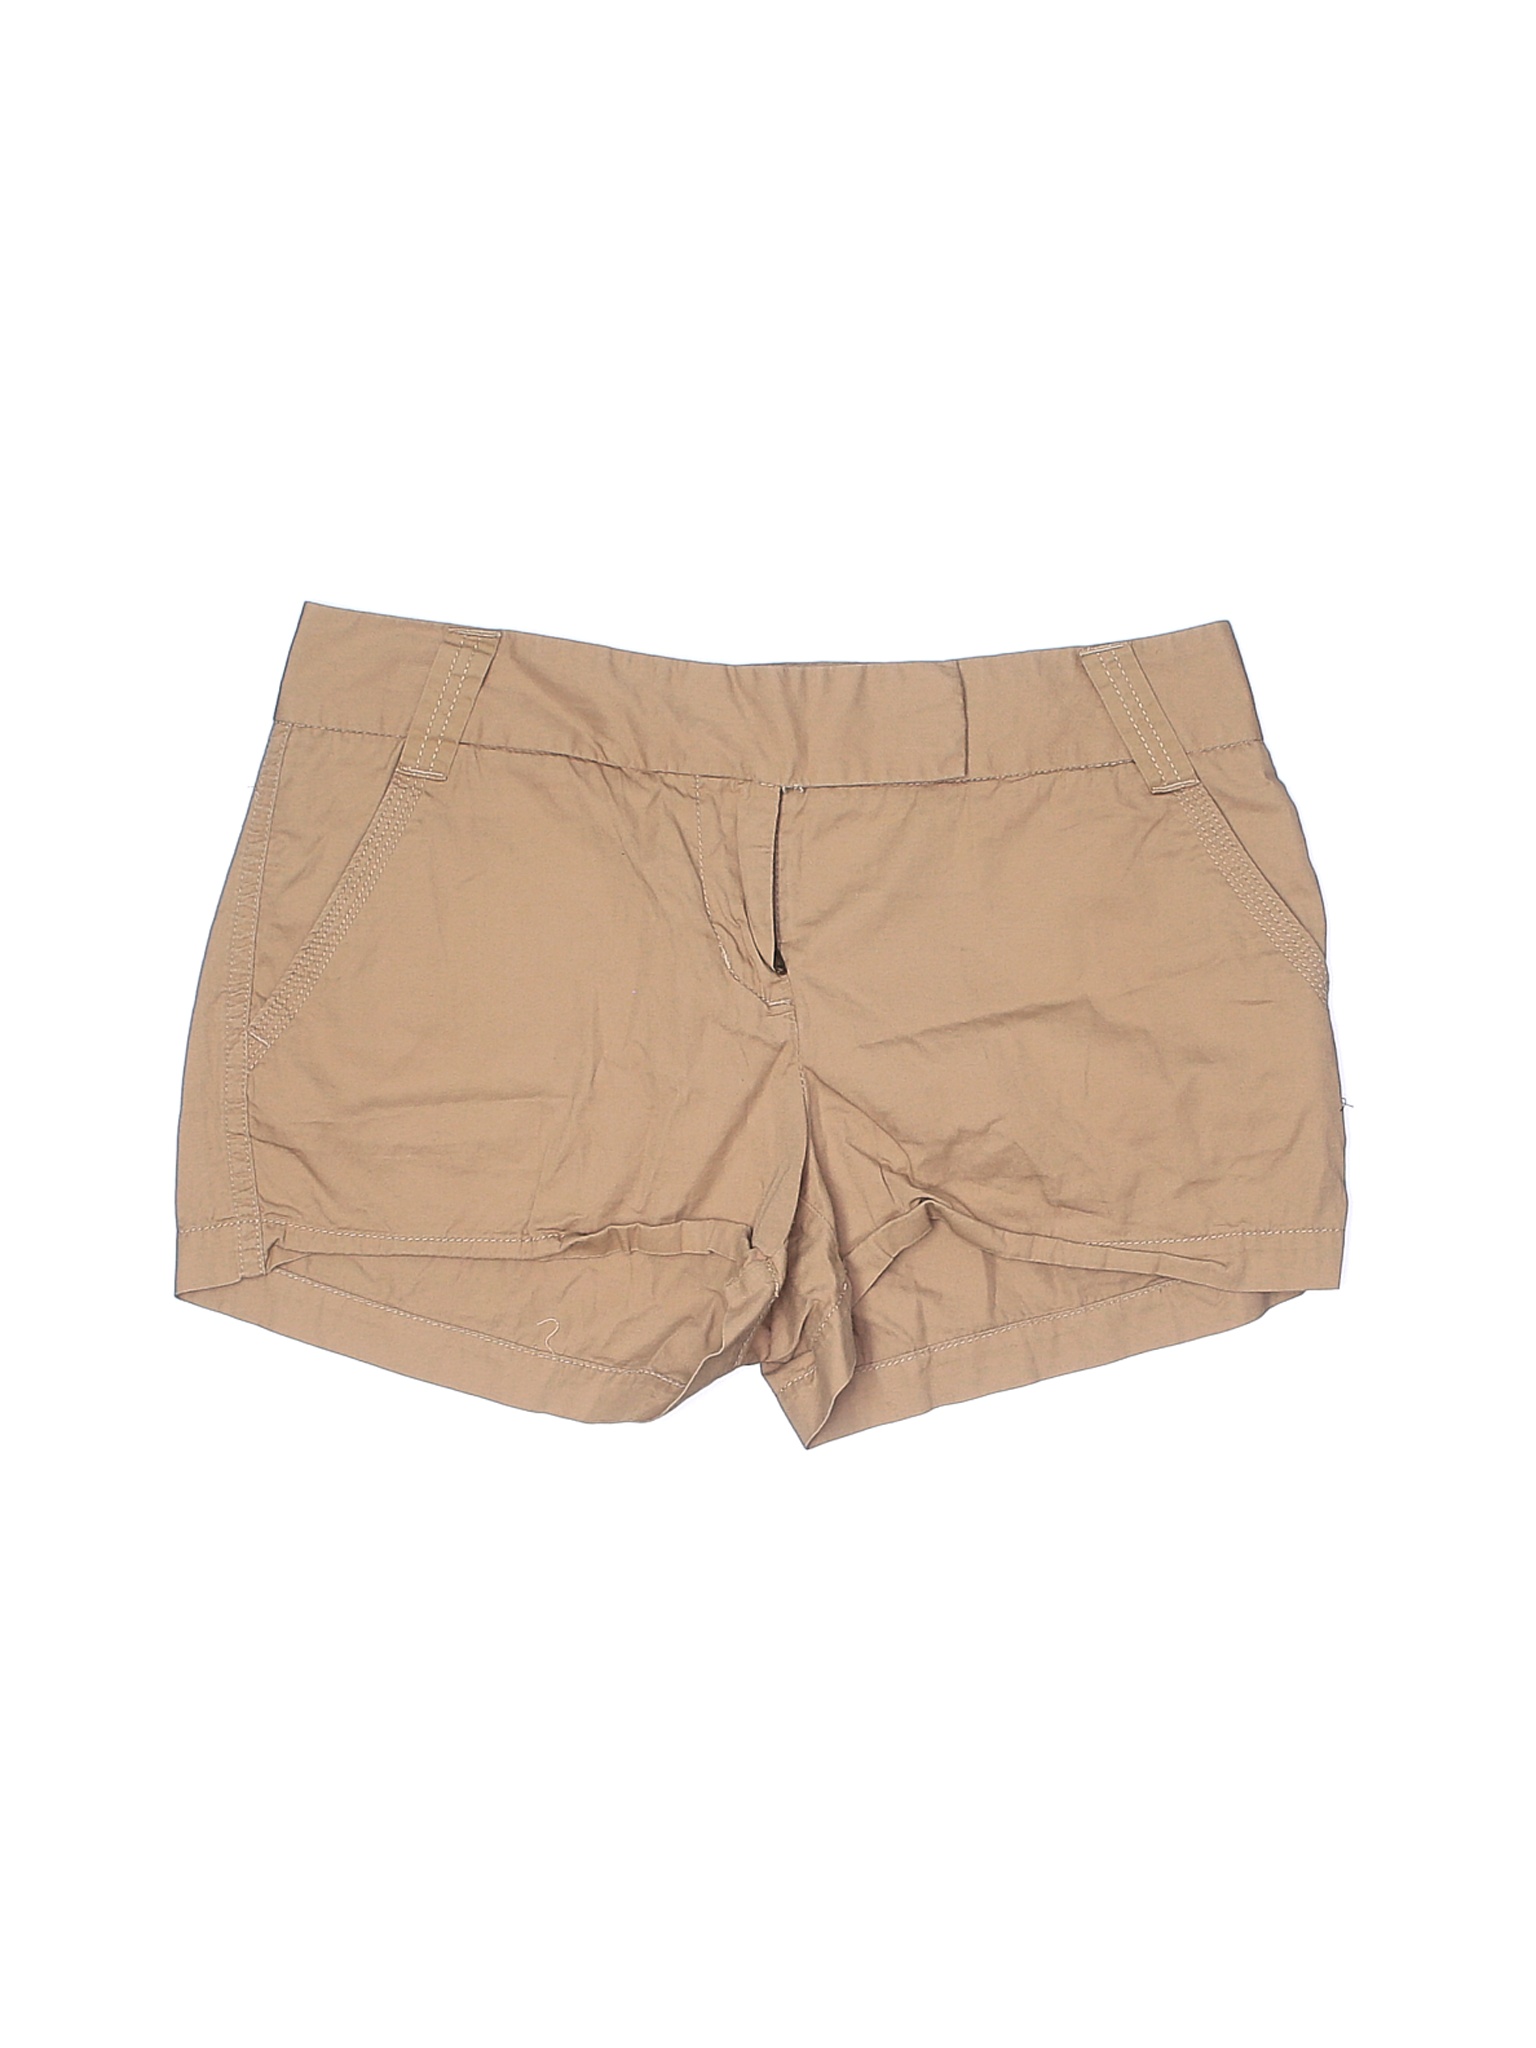 J.Crew Women Brown Khaki Shorts 6 | eBay